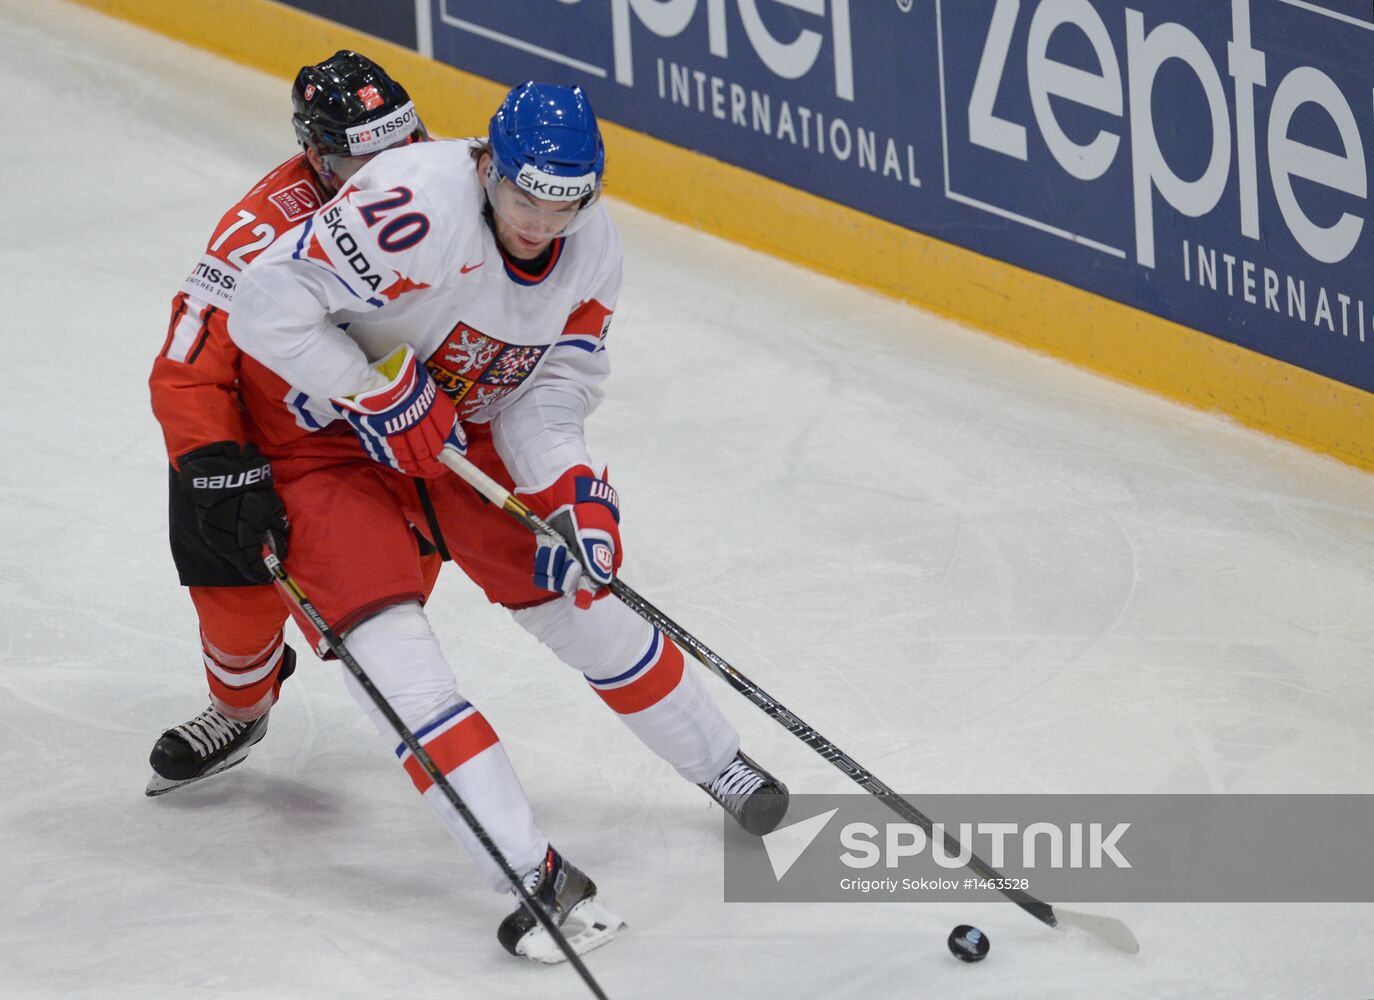 2013 IIHF World Championships. Switzerland vs. Czech Republic